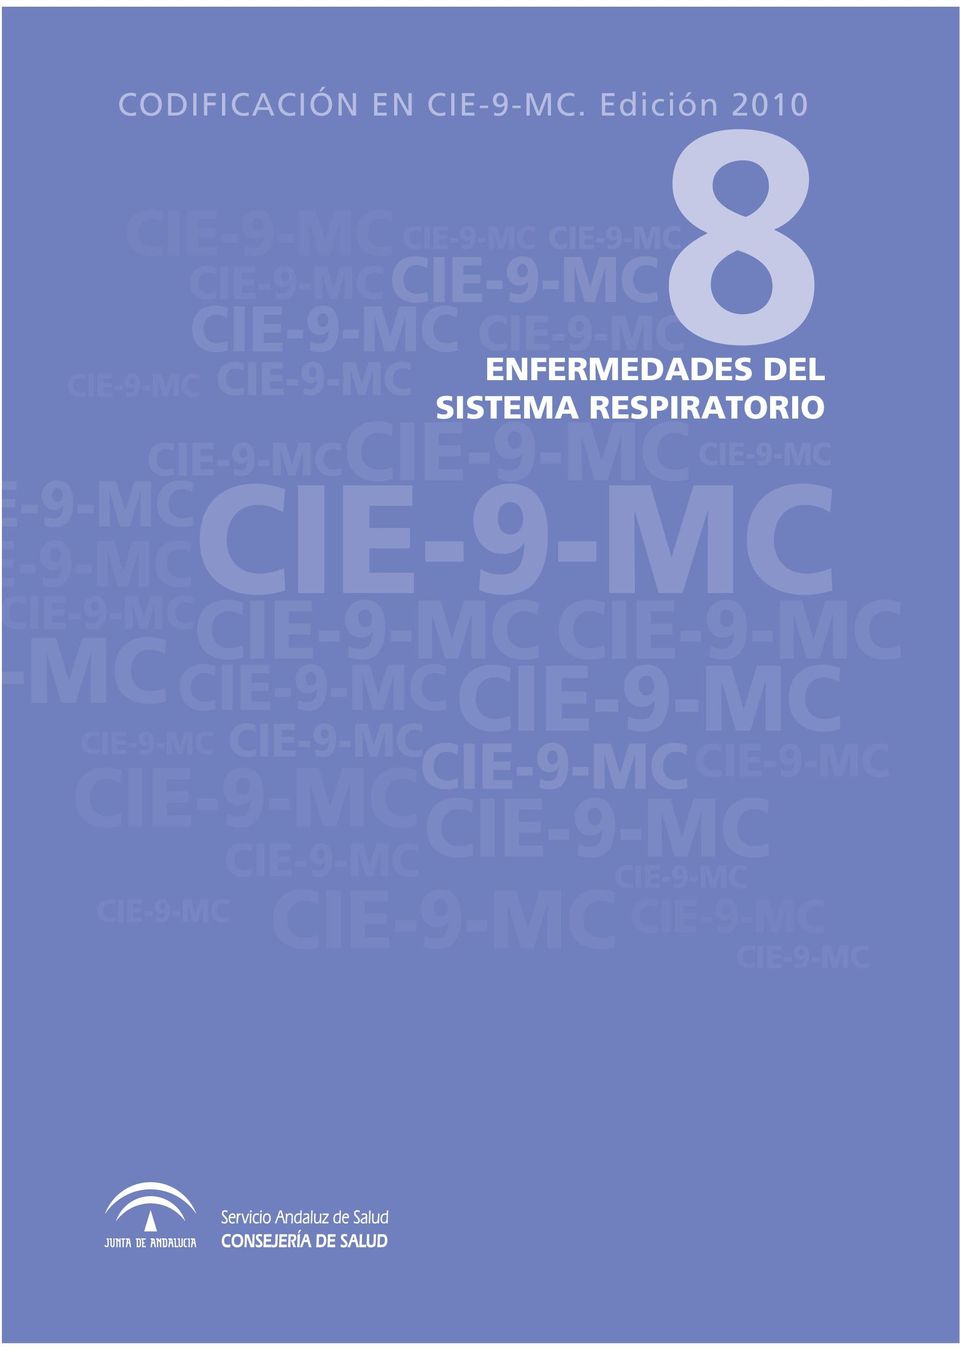 ENFERMEDADES DEL SISTEMA RESPIRATORIO -9-MC -9-MC IE-9-MC CIE-9-MC CIE-9-MC CIE-9-MC